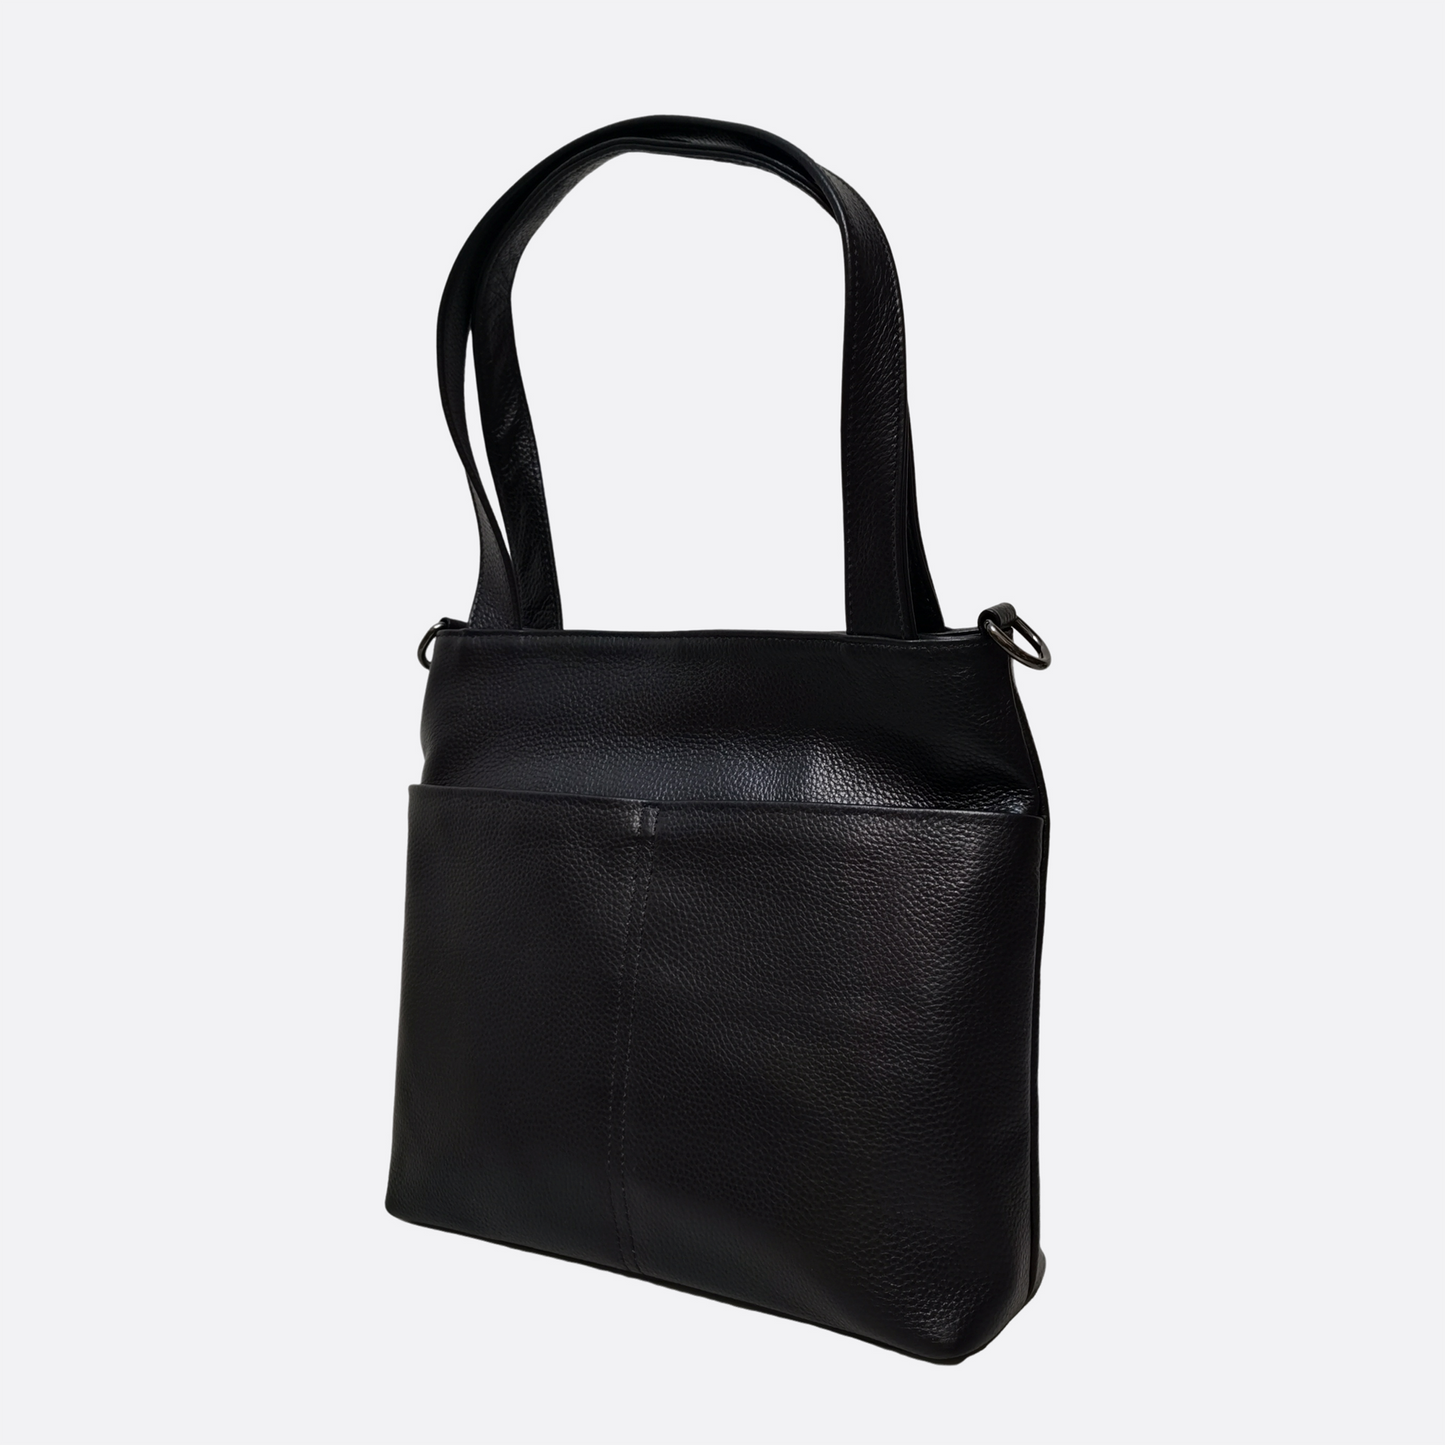 Women's genuine cowhide leather handbag Astor design